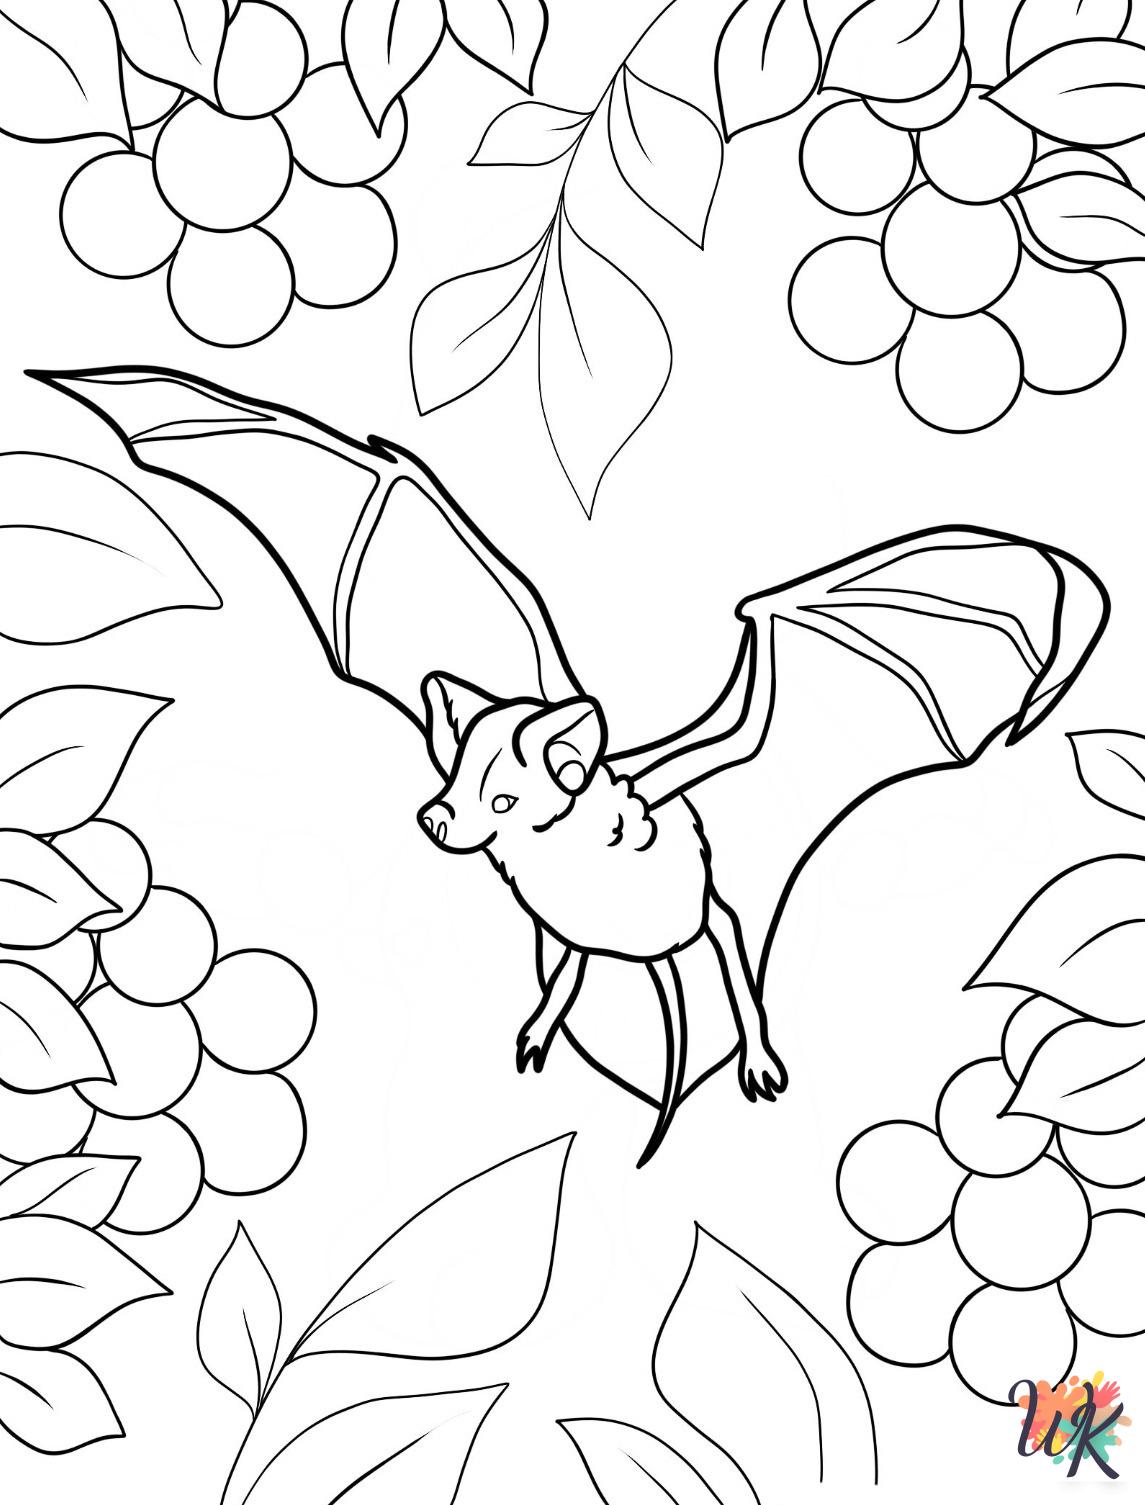 Bat coloring book pages